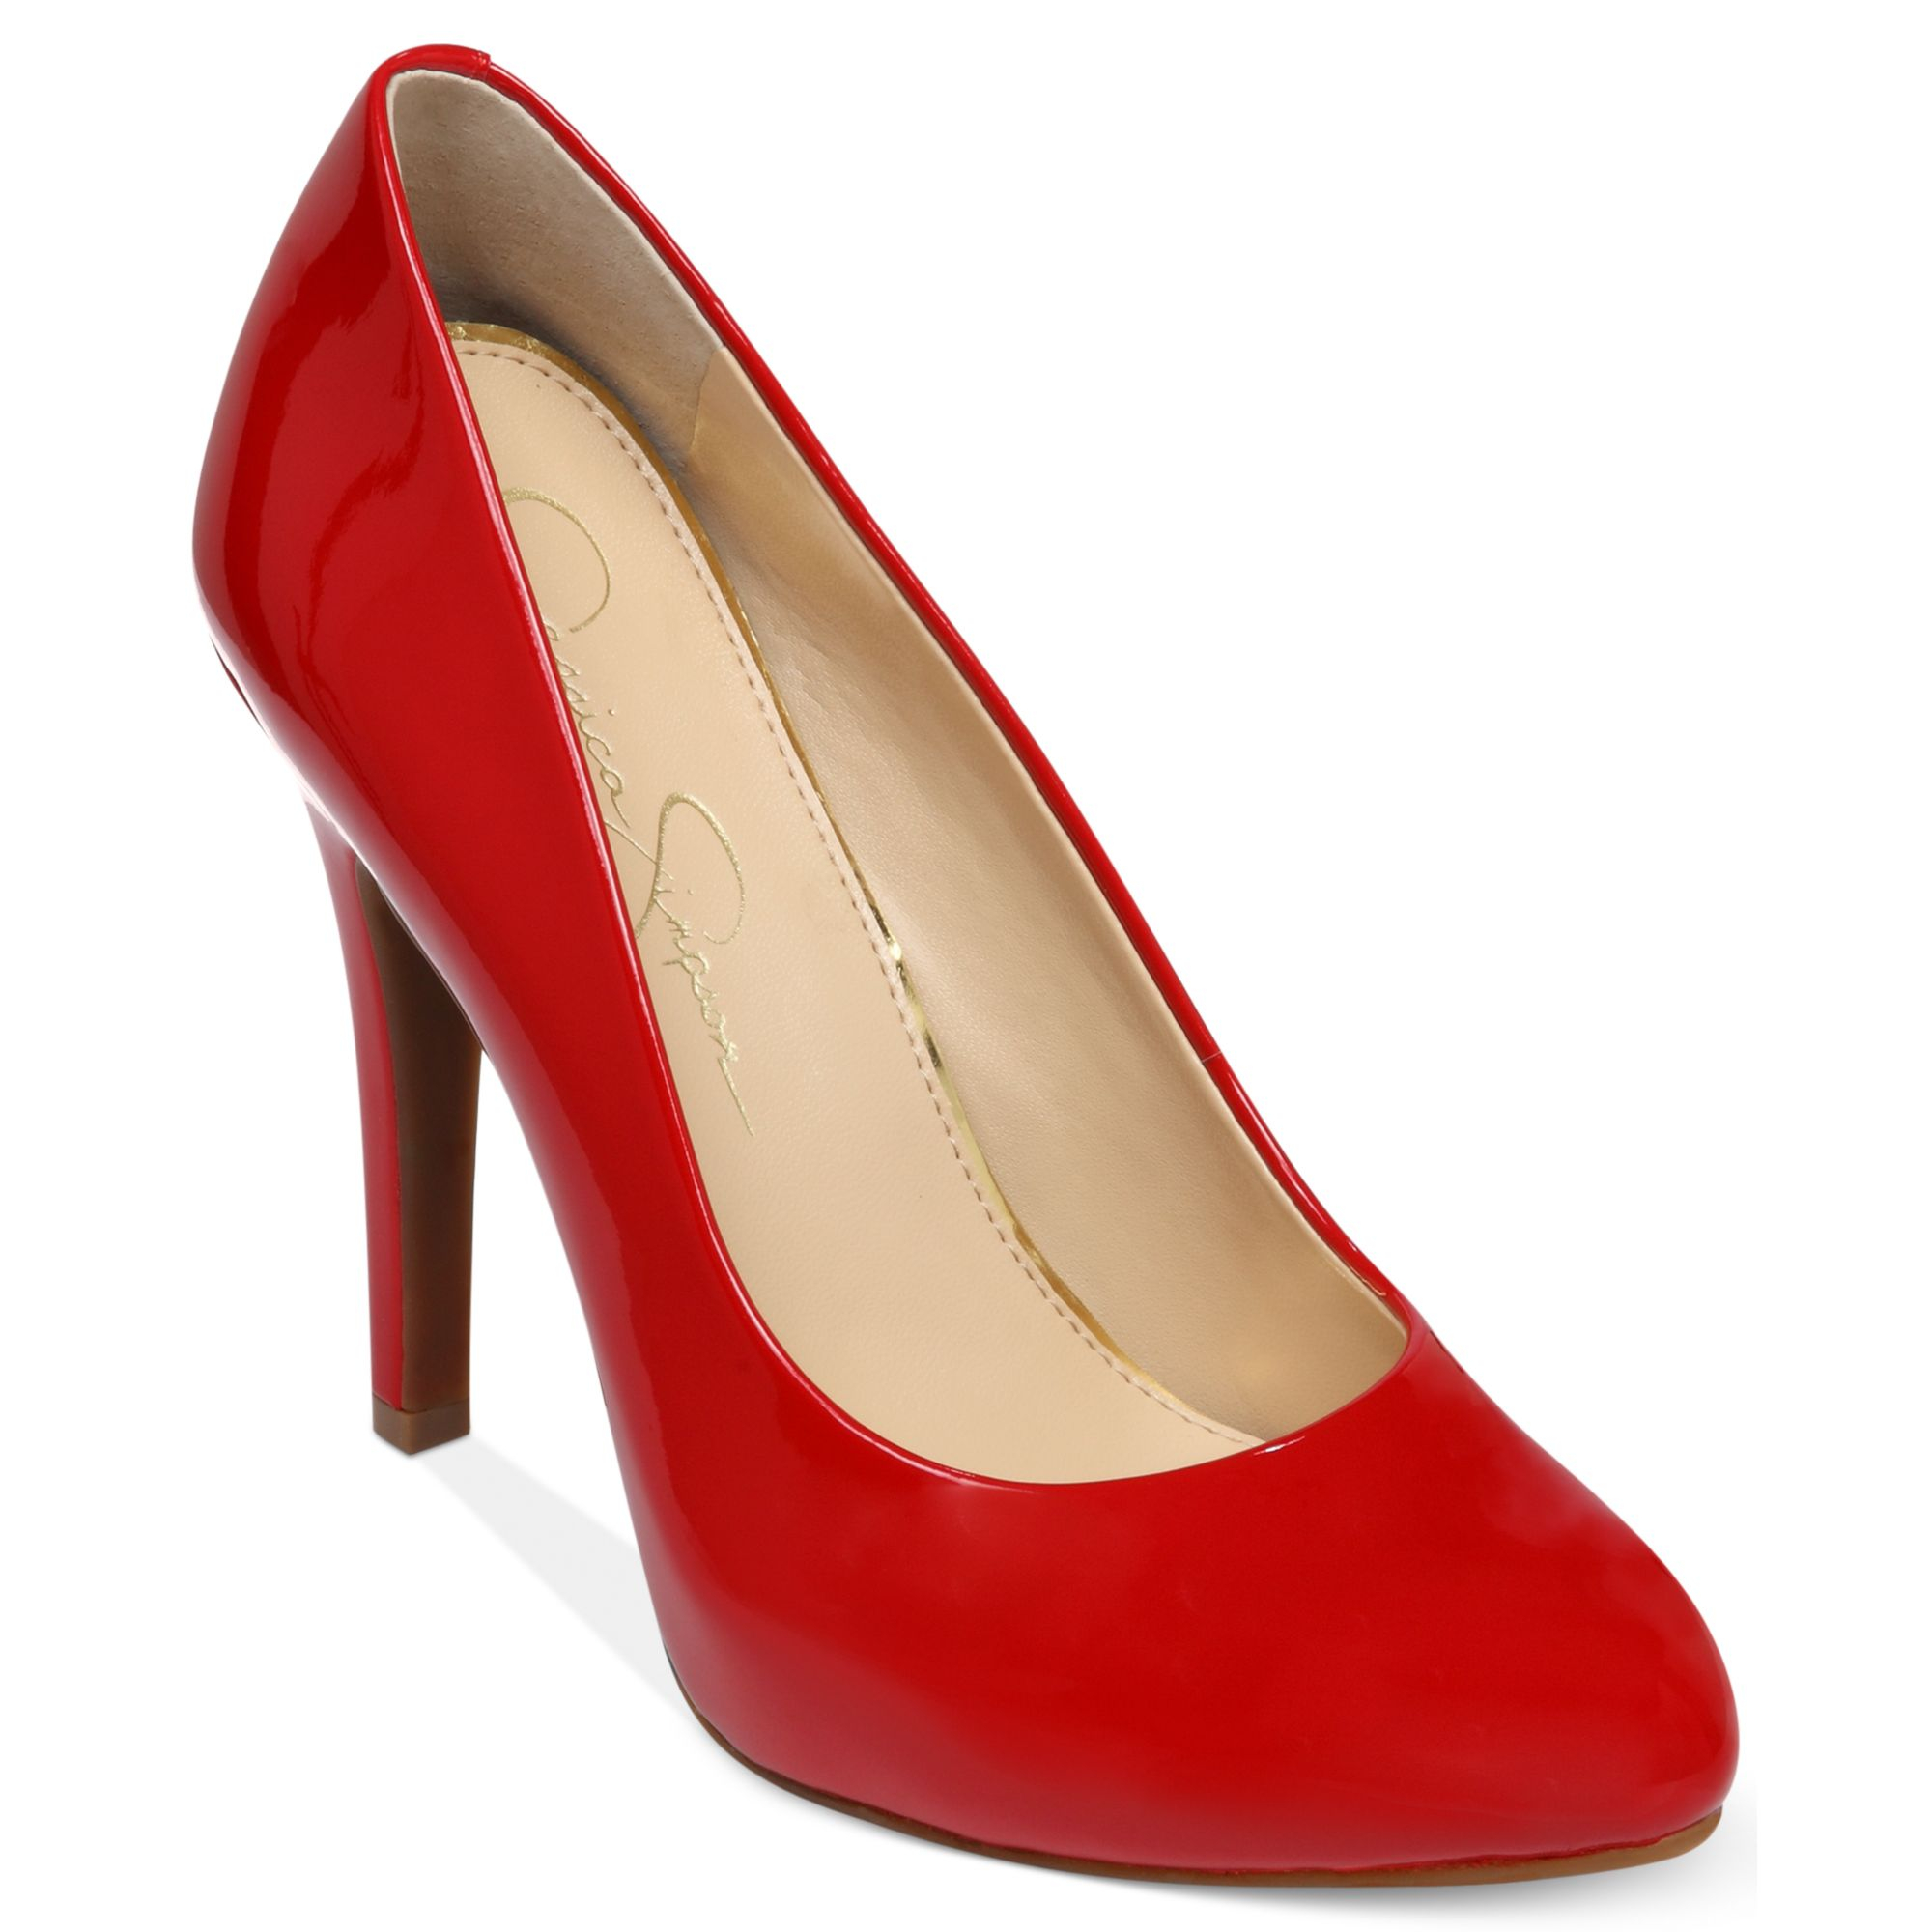 Jessica Simpson Malia Pumps in Red (Lipstick Red Patent) | Lyst